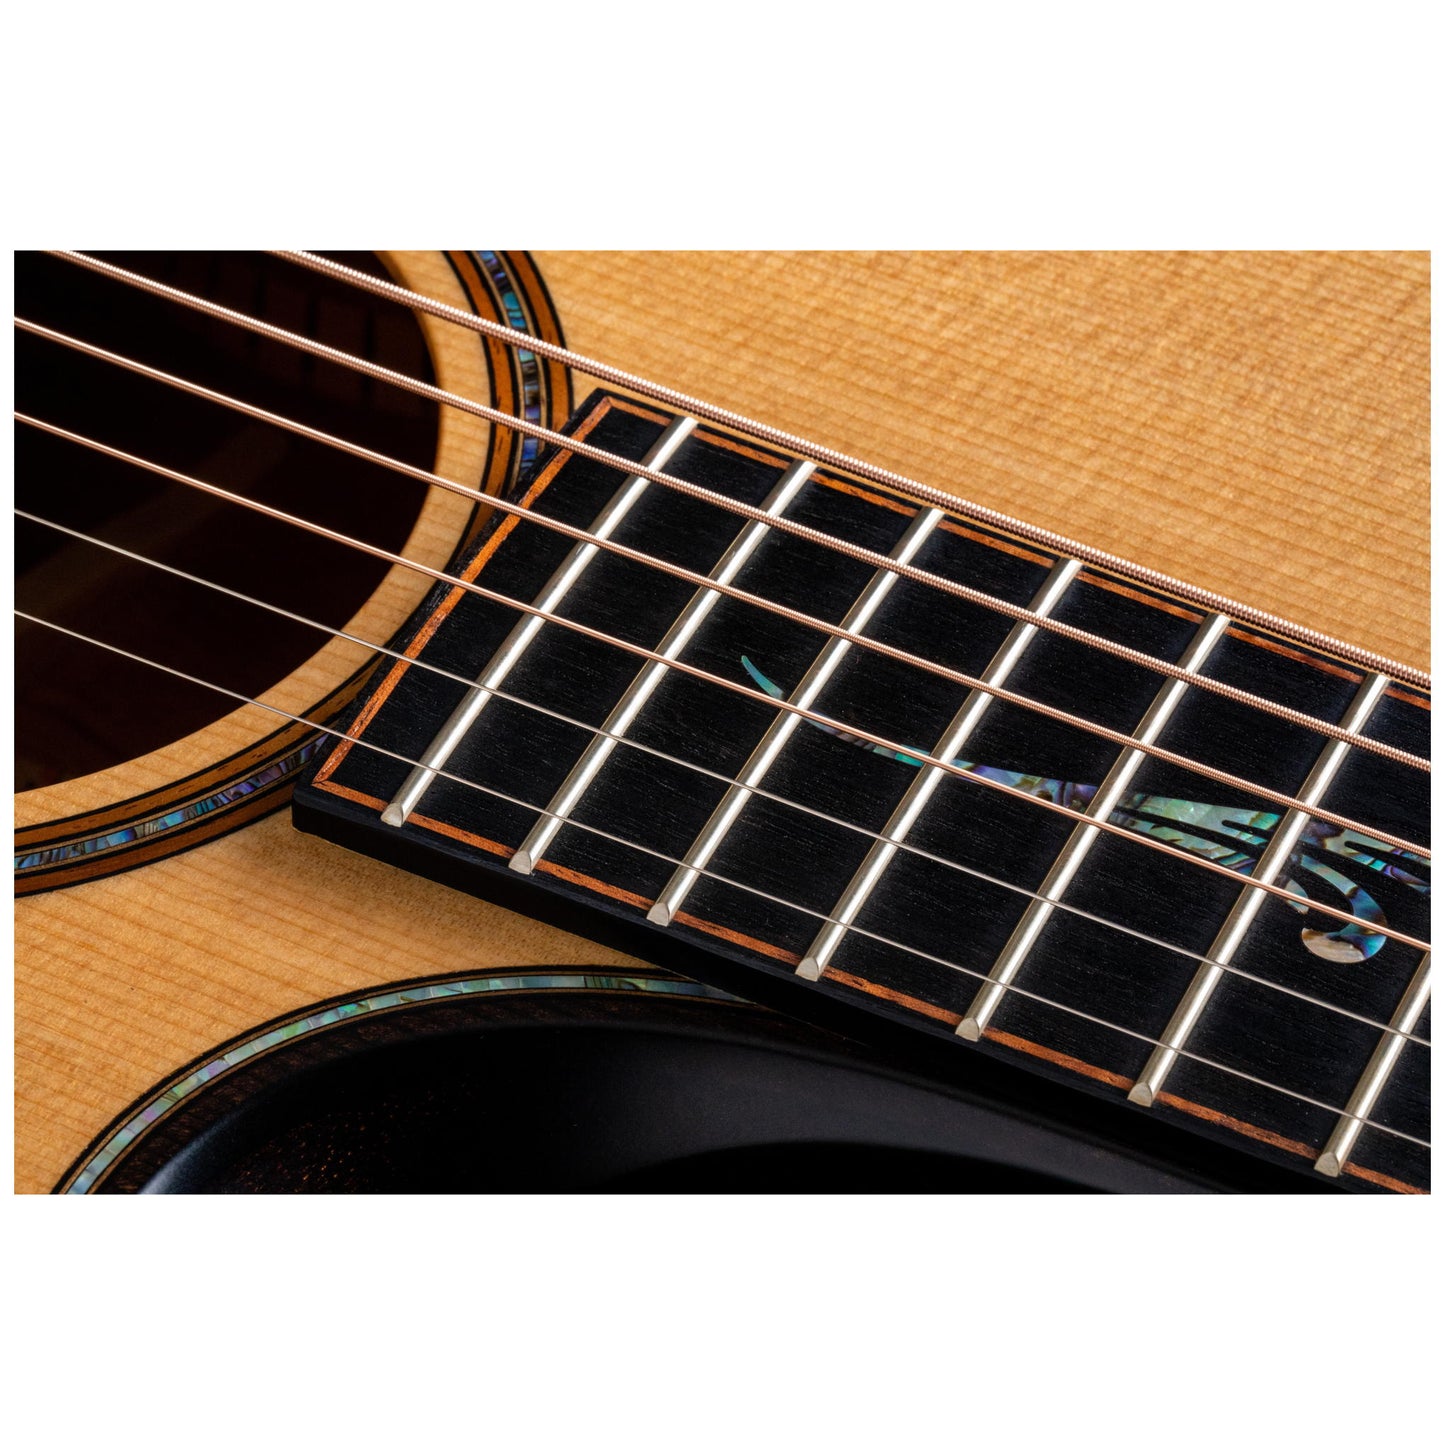 Taylor K14ce Builder's Edition Acoustic-Electric Guitar, Kona Burst